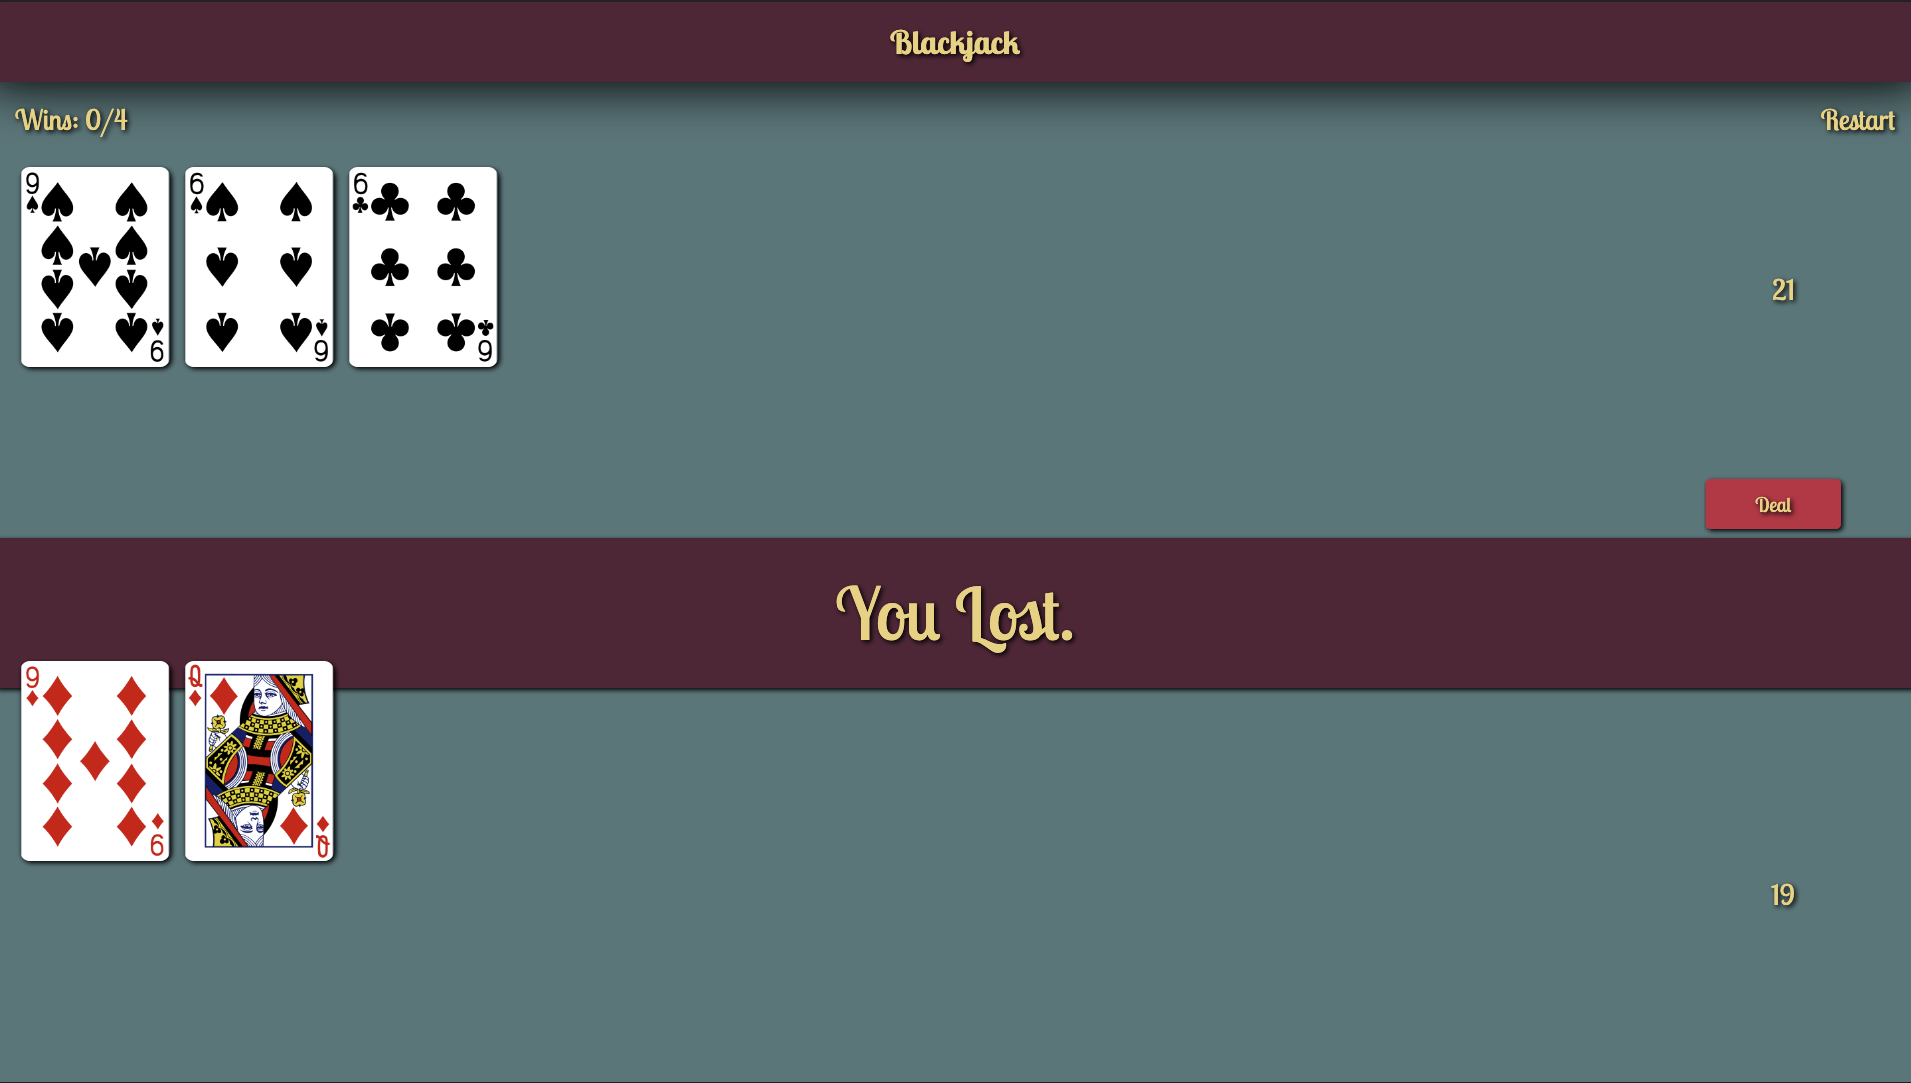 Blackjack feature image